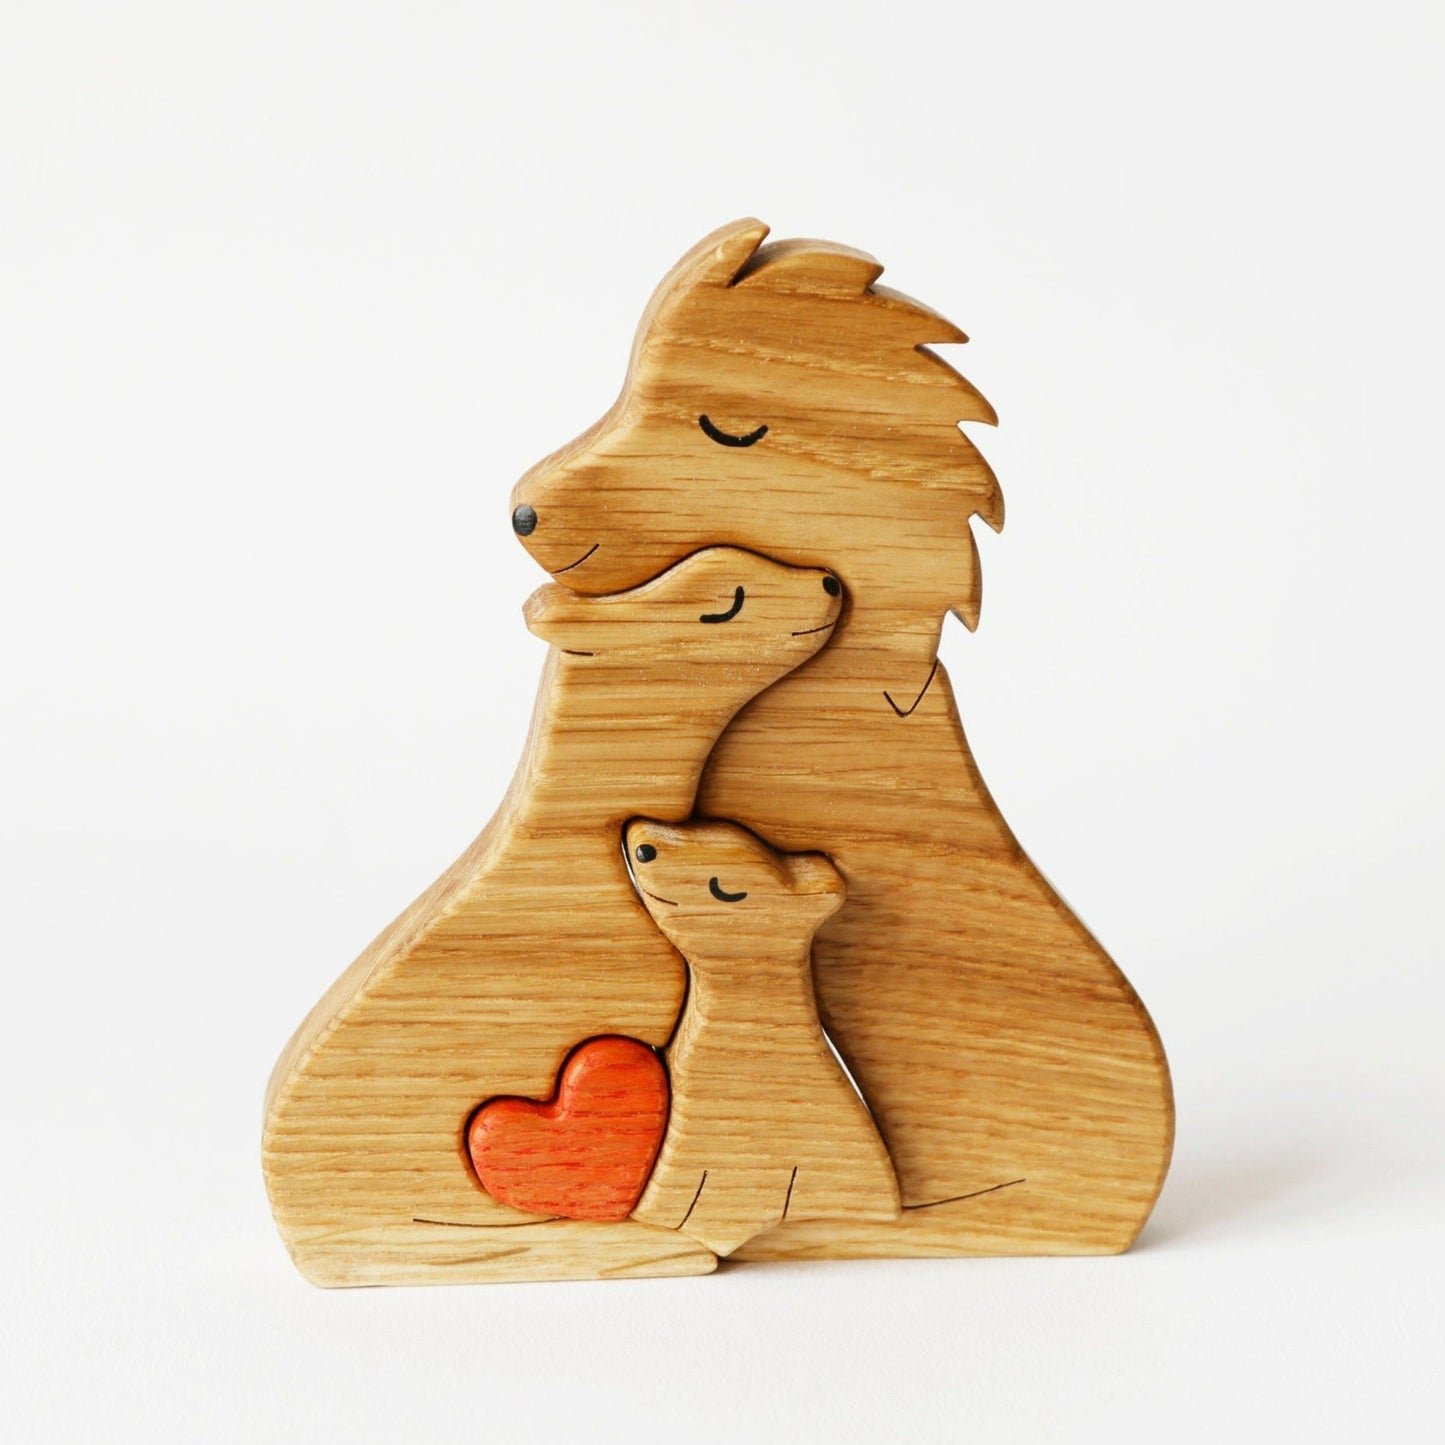 Wooden lion family puzzle